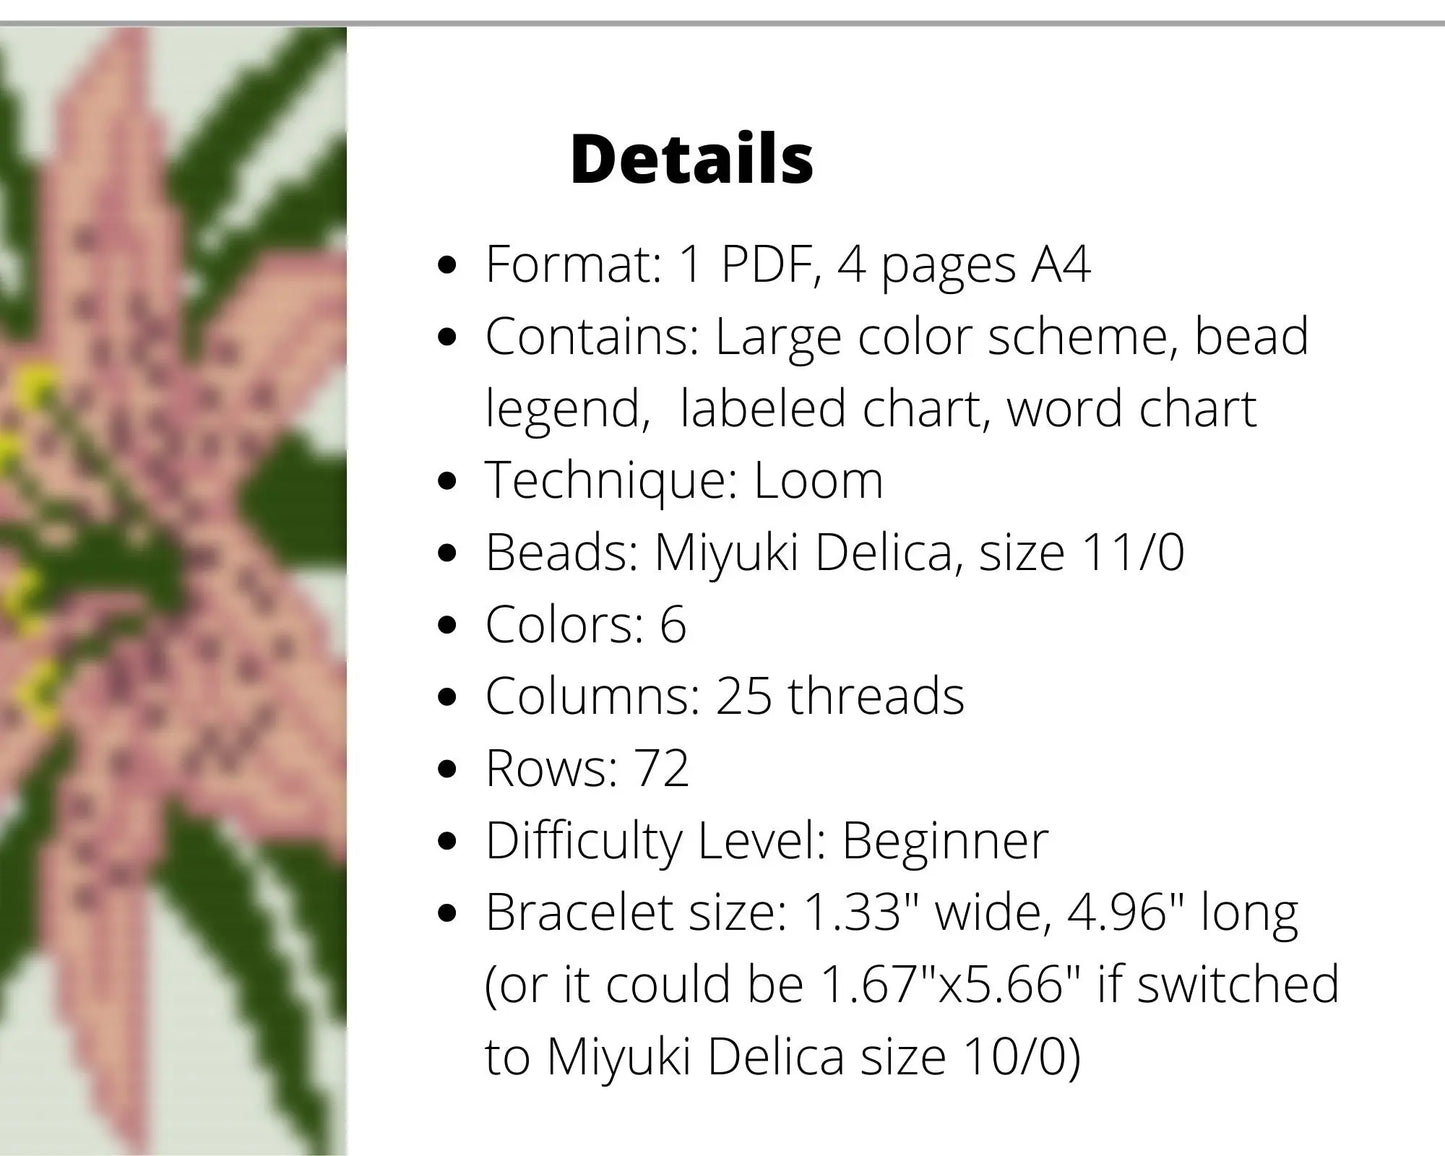 Pink Lily Loom pattern for beaded bracelet NikoBeadsUA